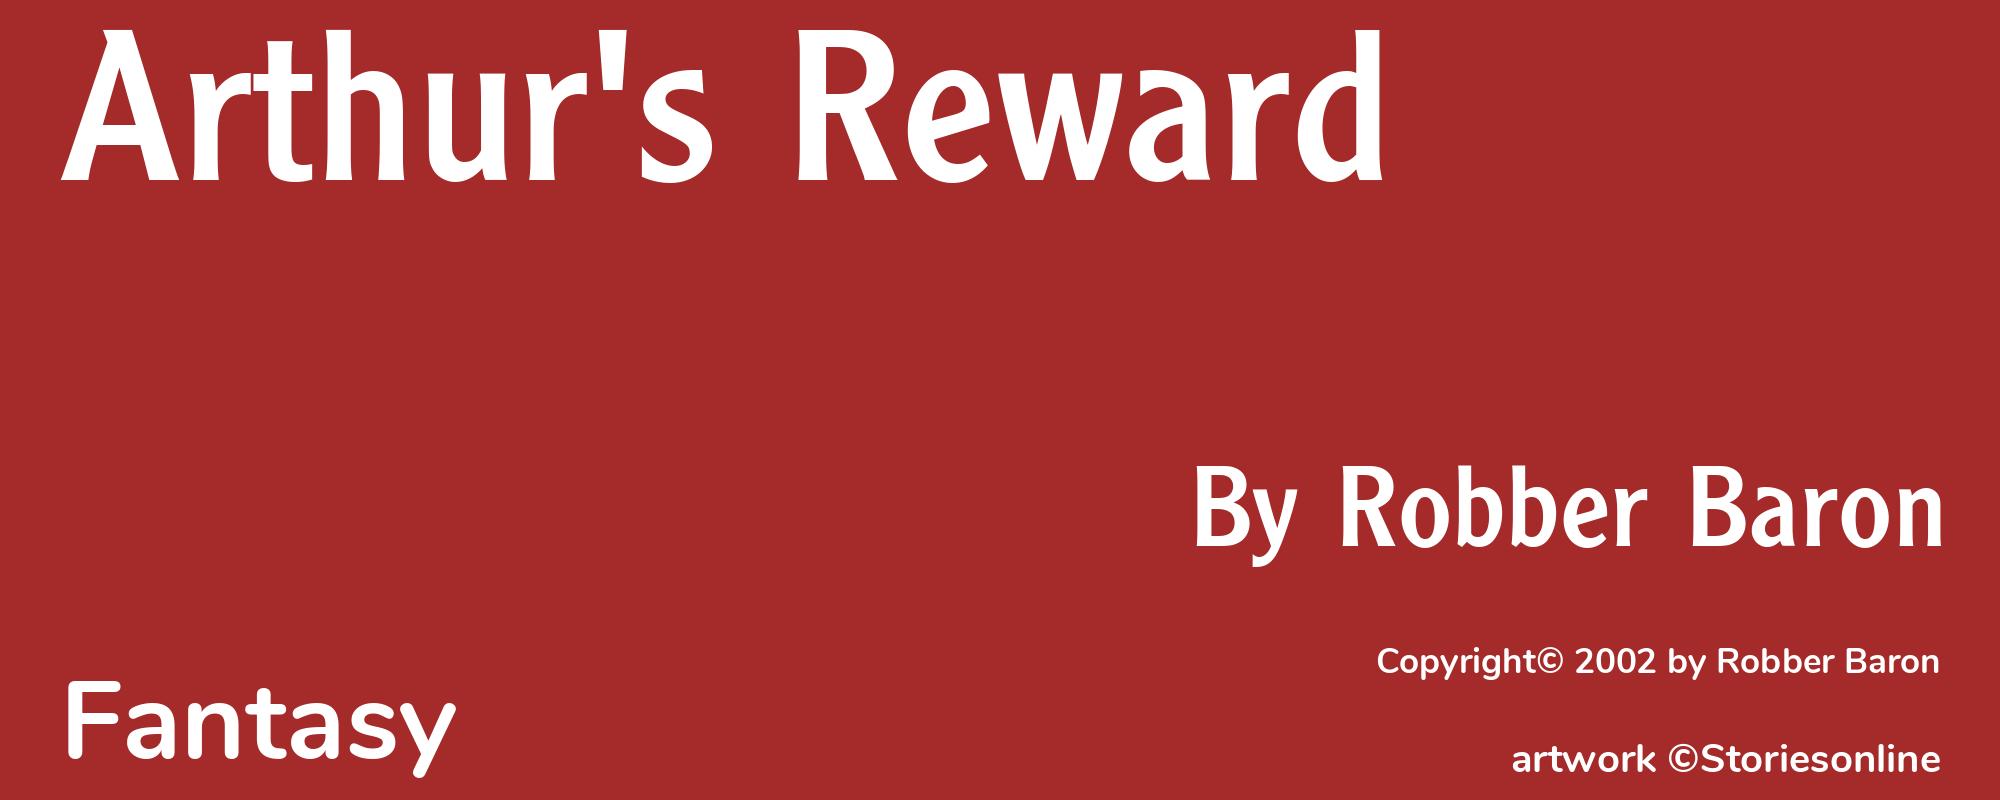 Arthur's Reward - Cover